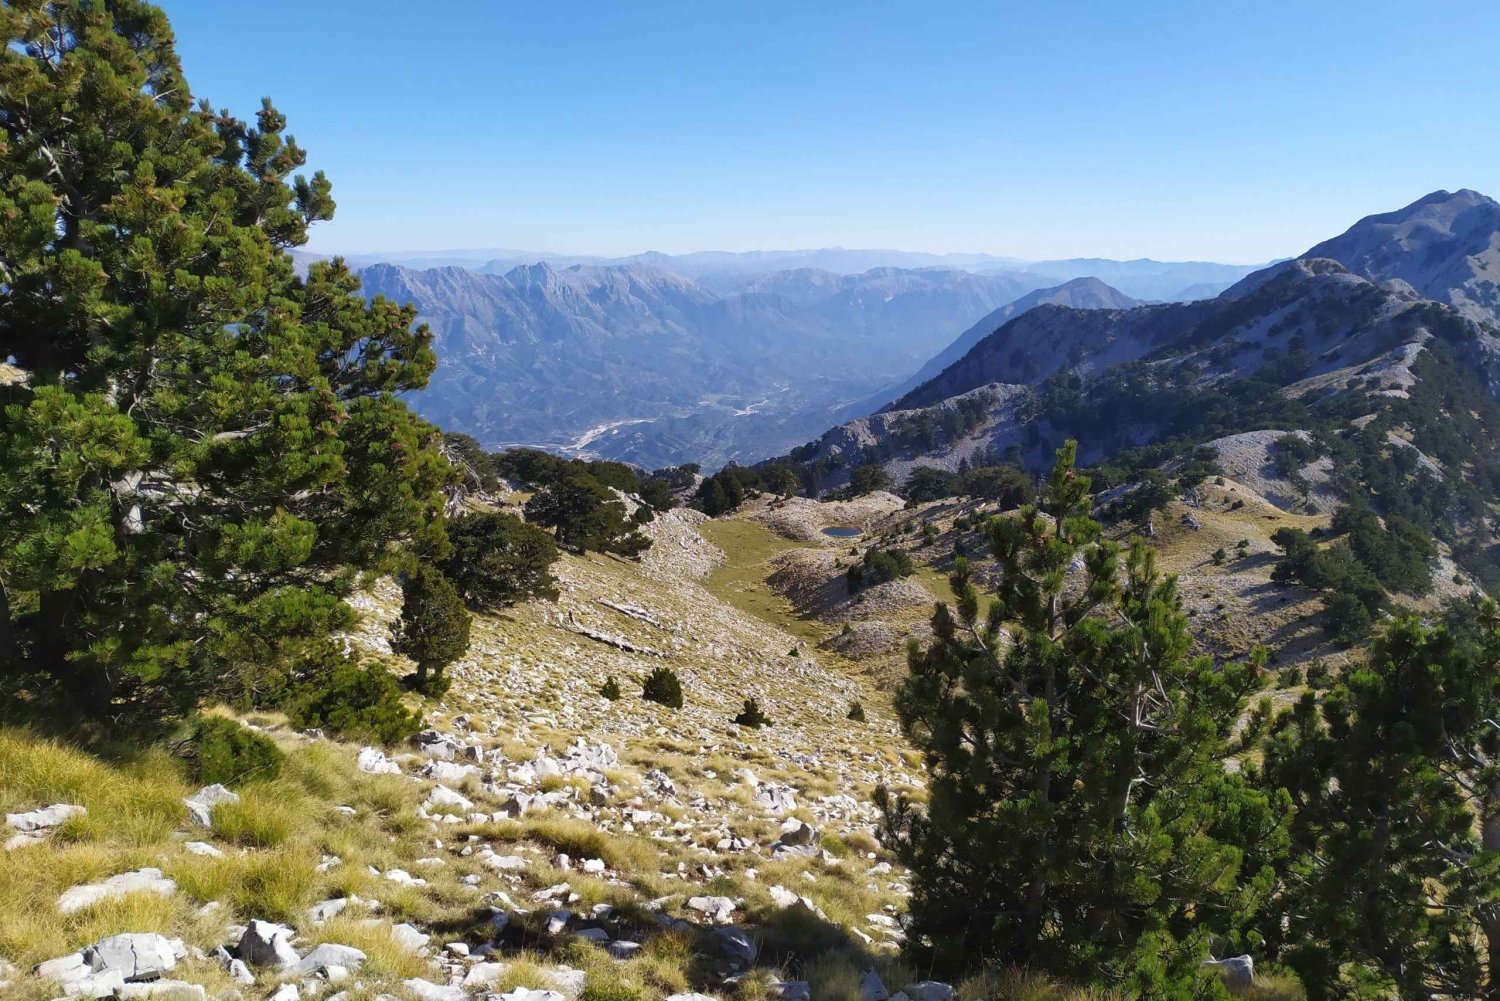 Vlore : Daily hiking at Qorre Peak, Llogara National Park